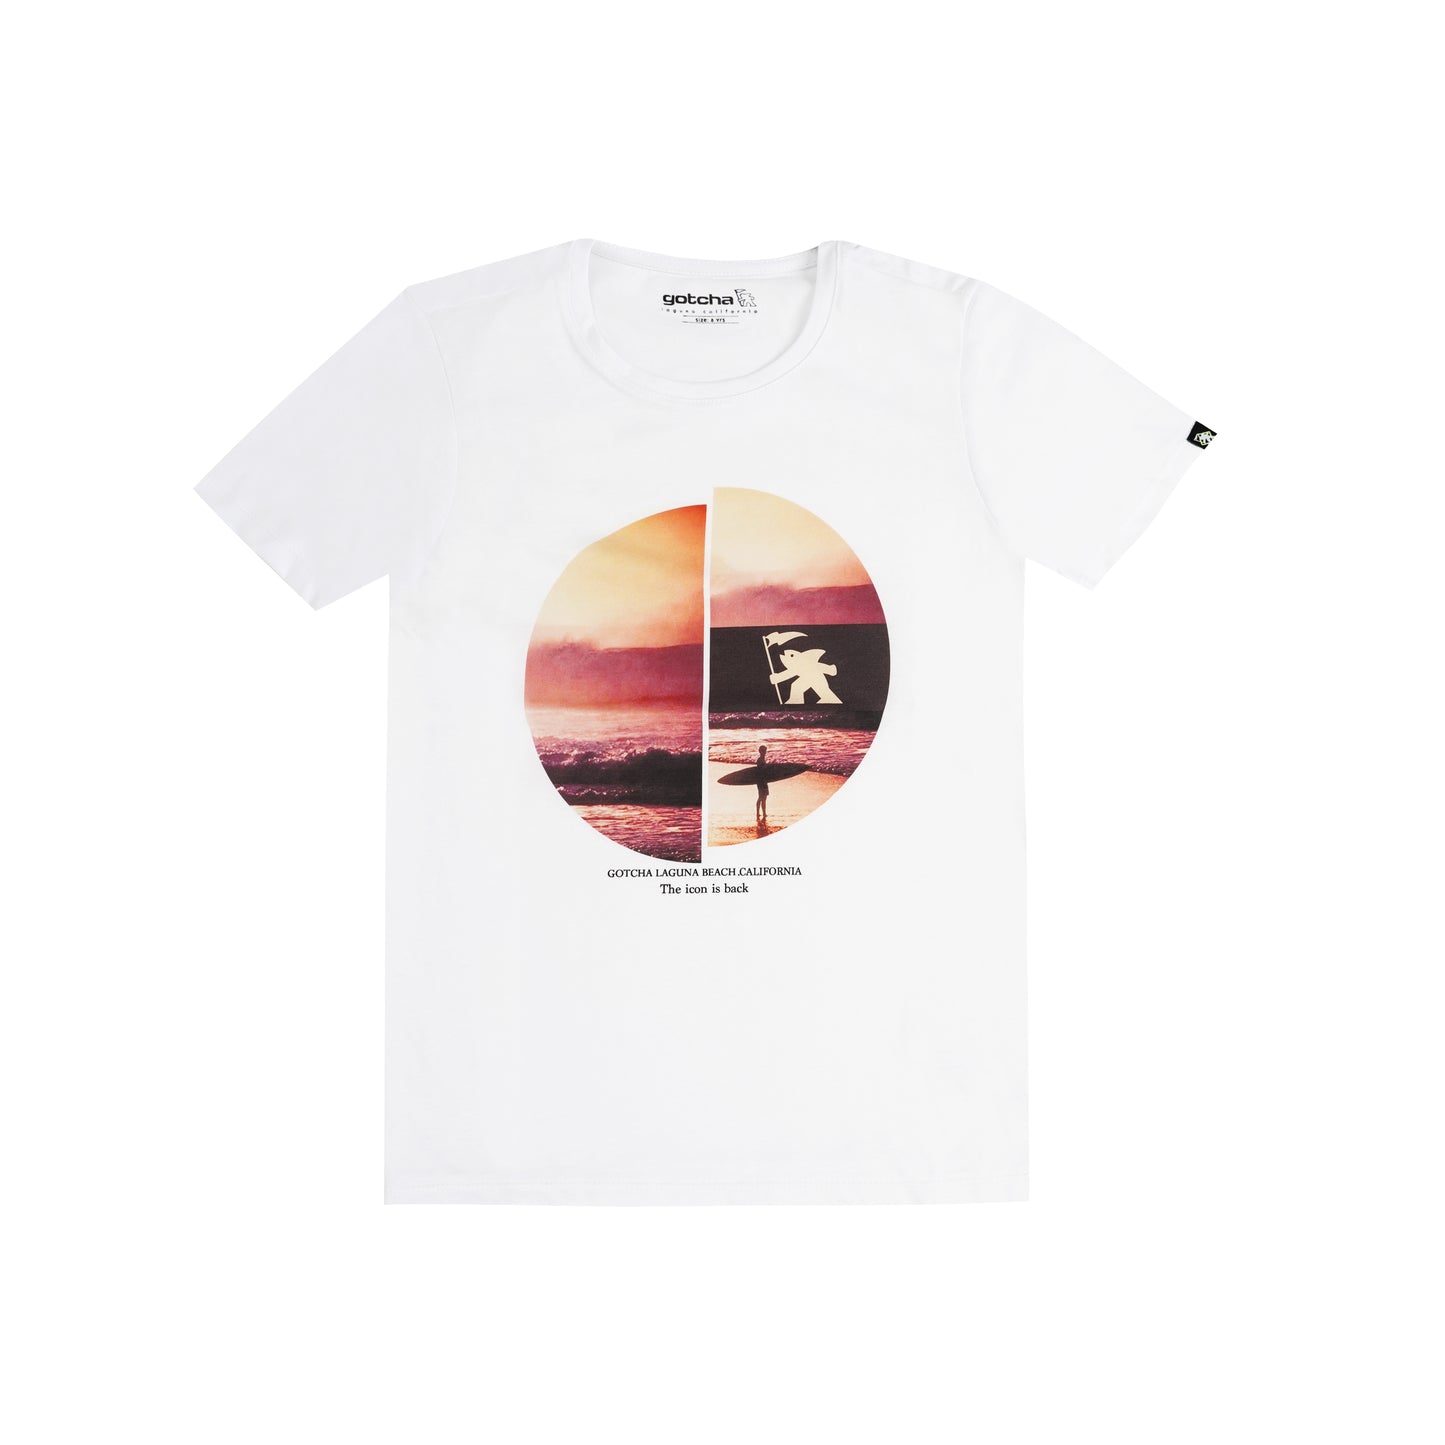 SunsetJr T-shirt